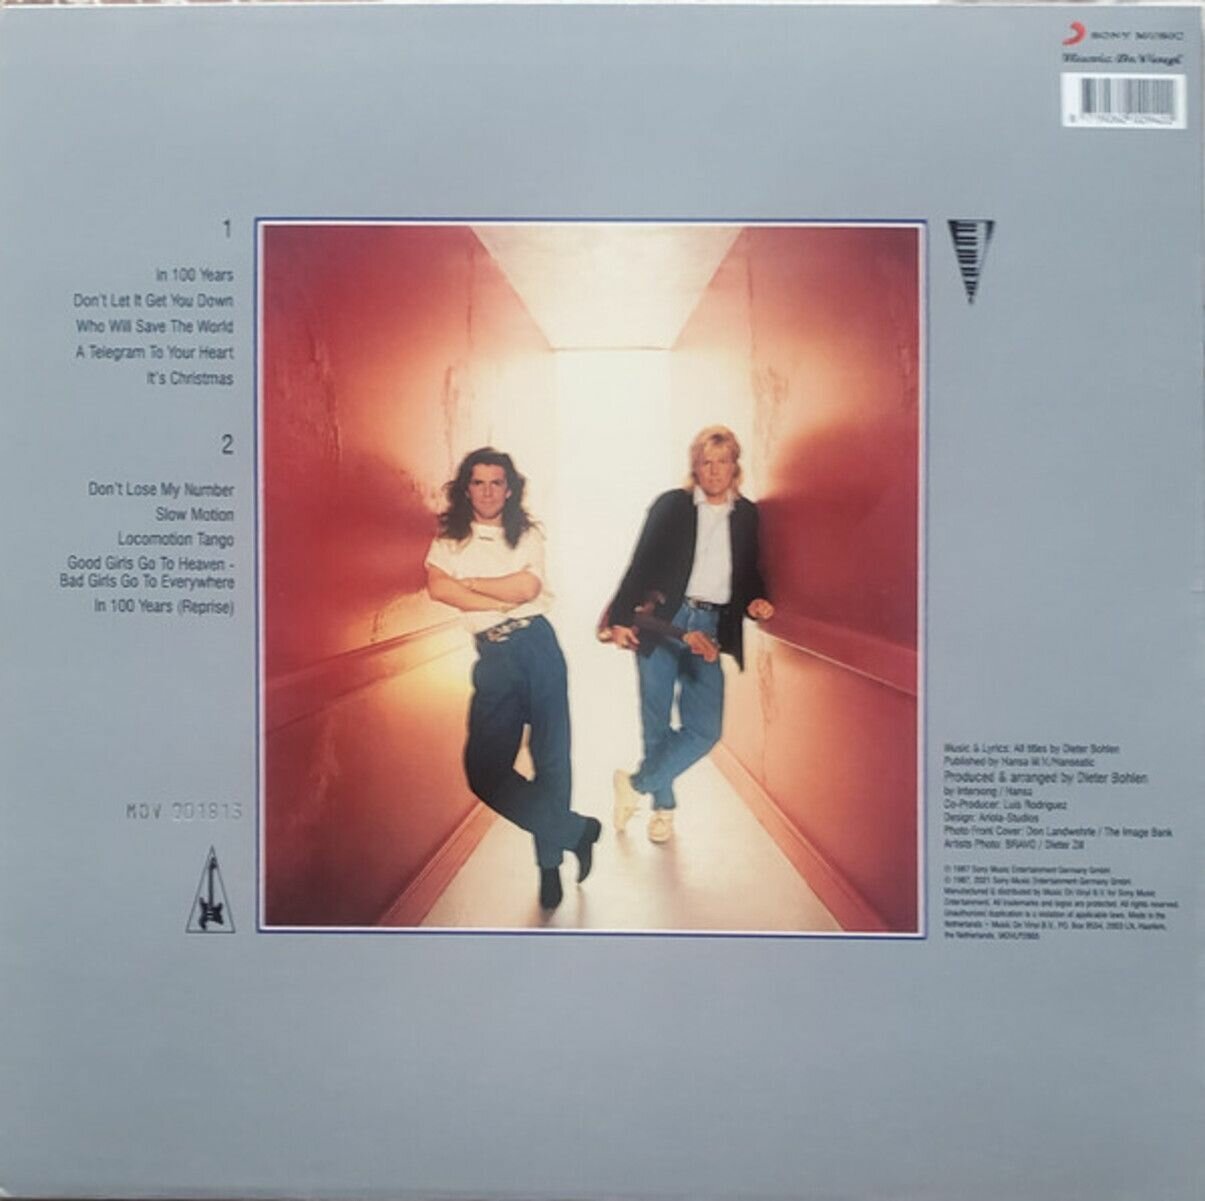 Виниловая пластинка Music ON Vinyl Modern Talking - In The Garden Of Venus, The 6th Album (Flaming)